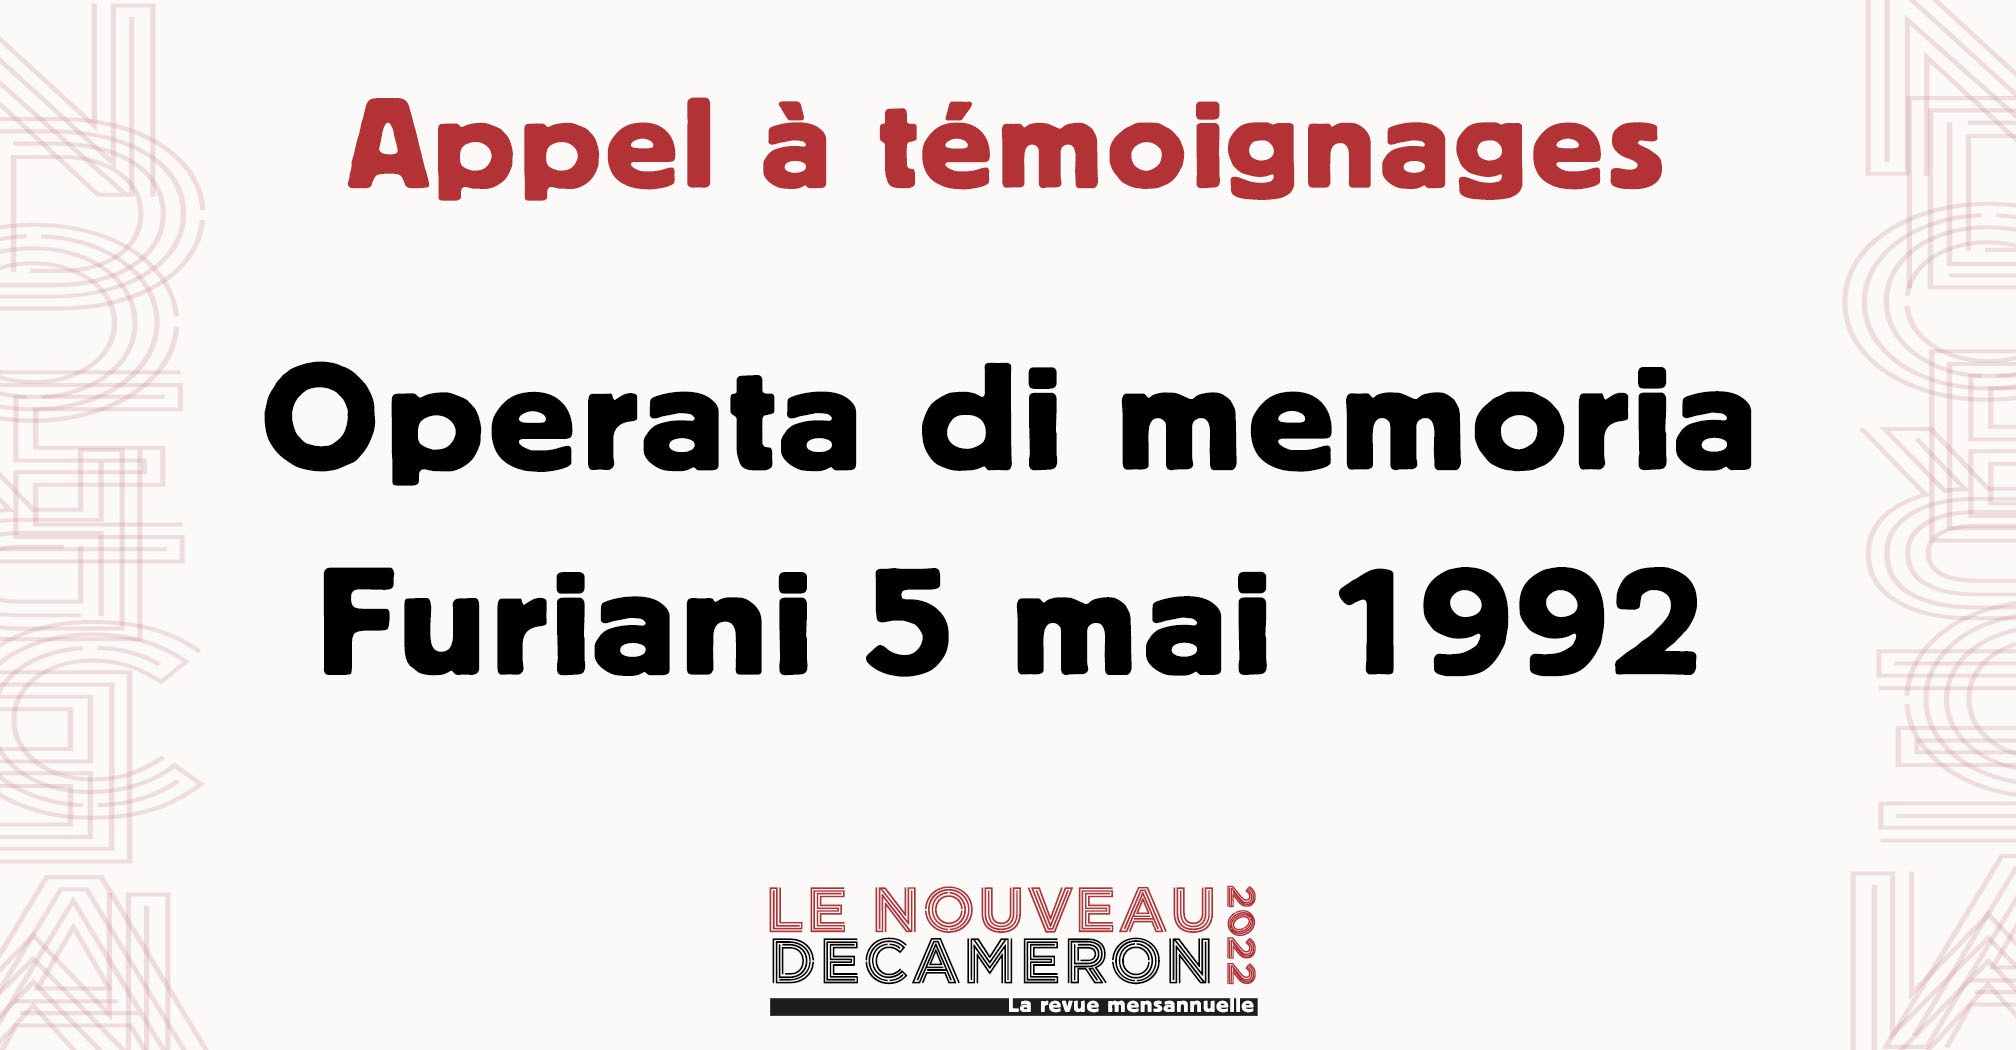 Operata di memoria / Mémoire vive du 5 mai 1992, un appel à témoigner